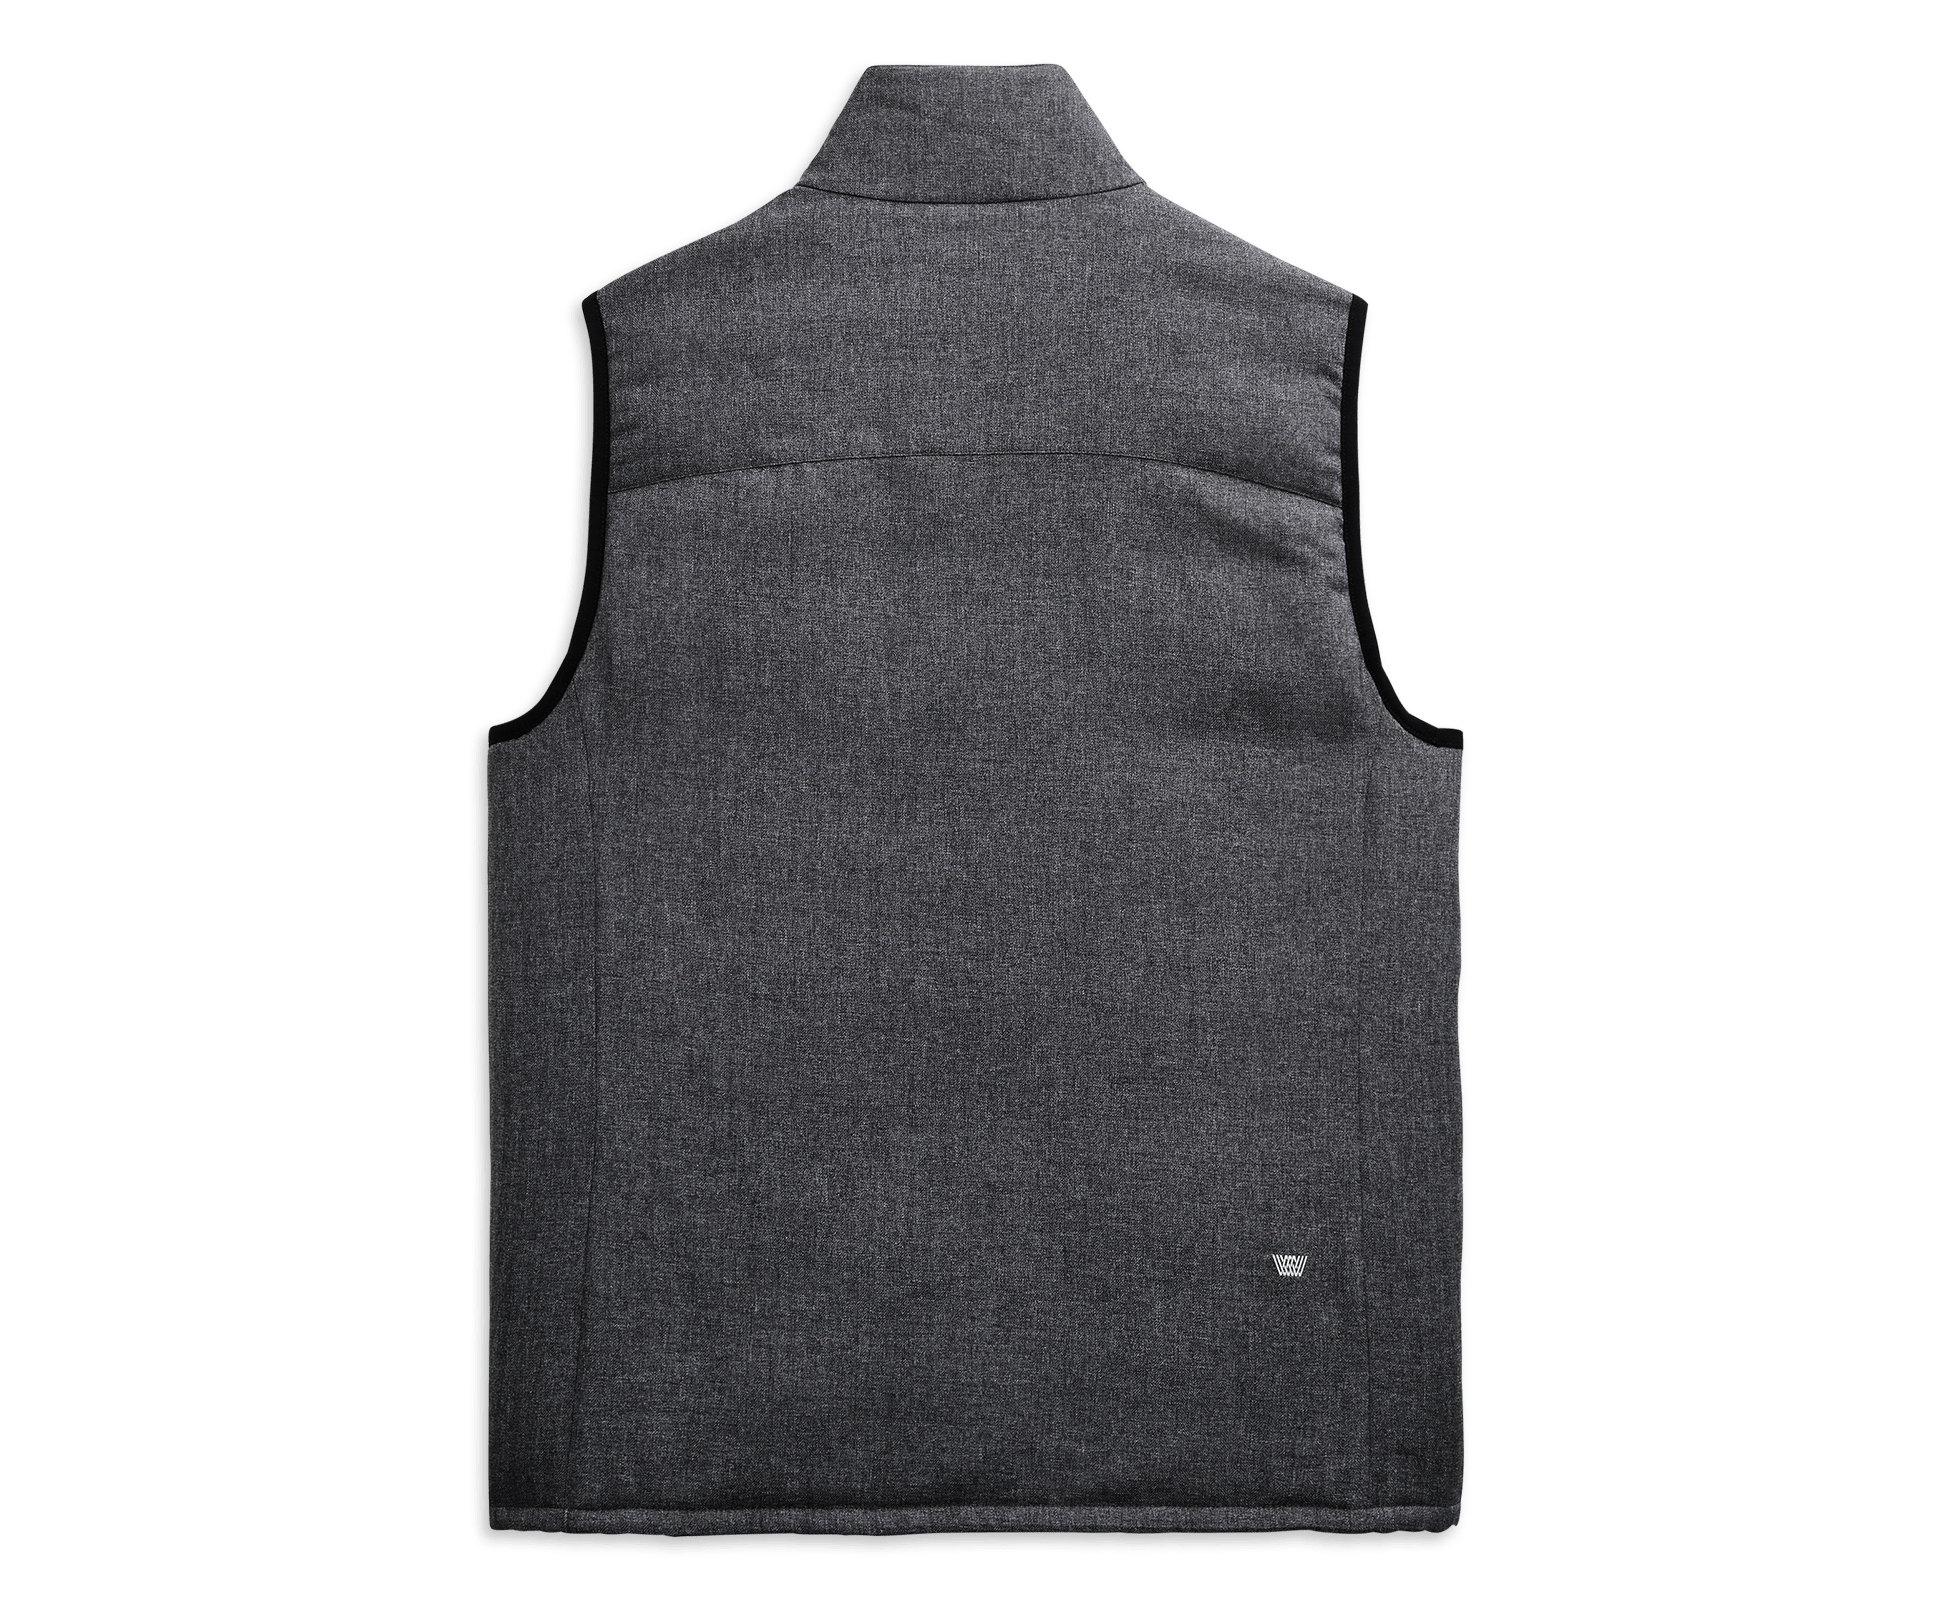 WARMKNIT 2-Way Puffer Vest Charcoal Heather / True Black